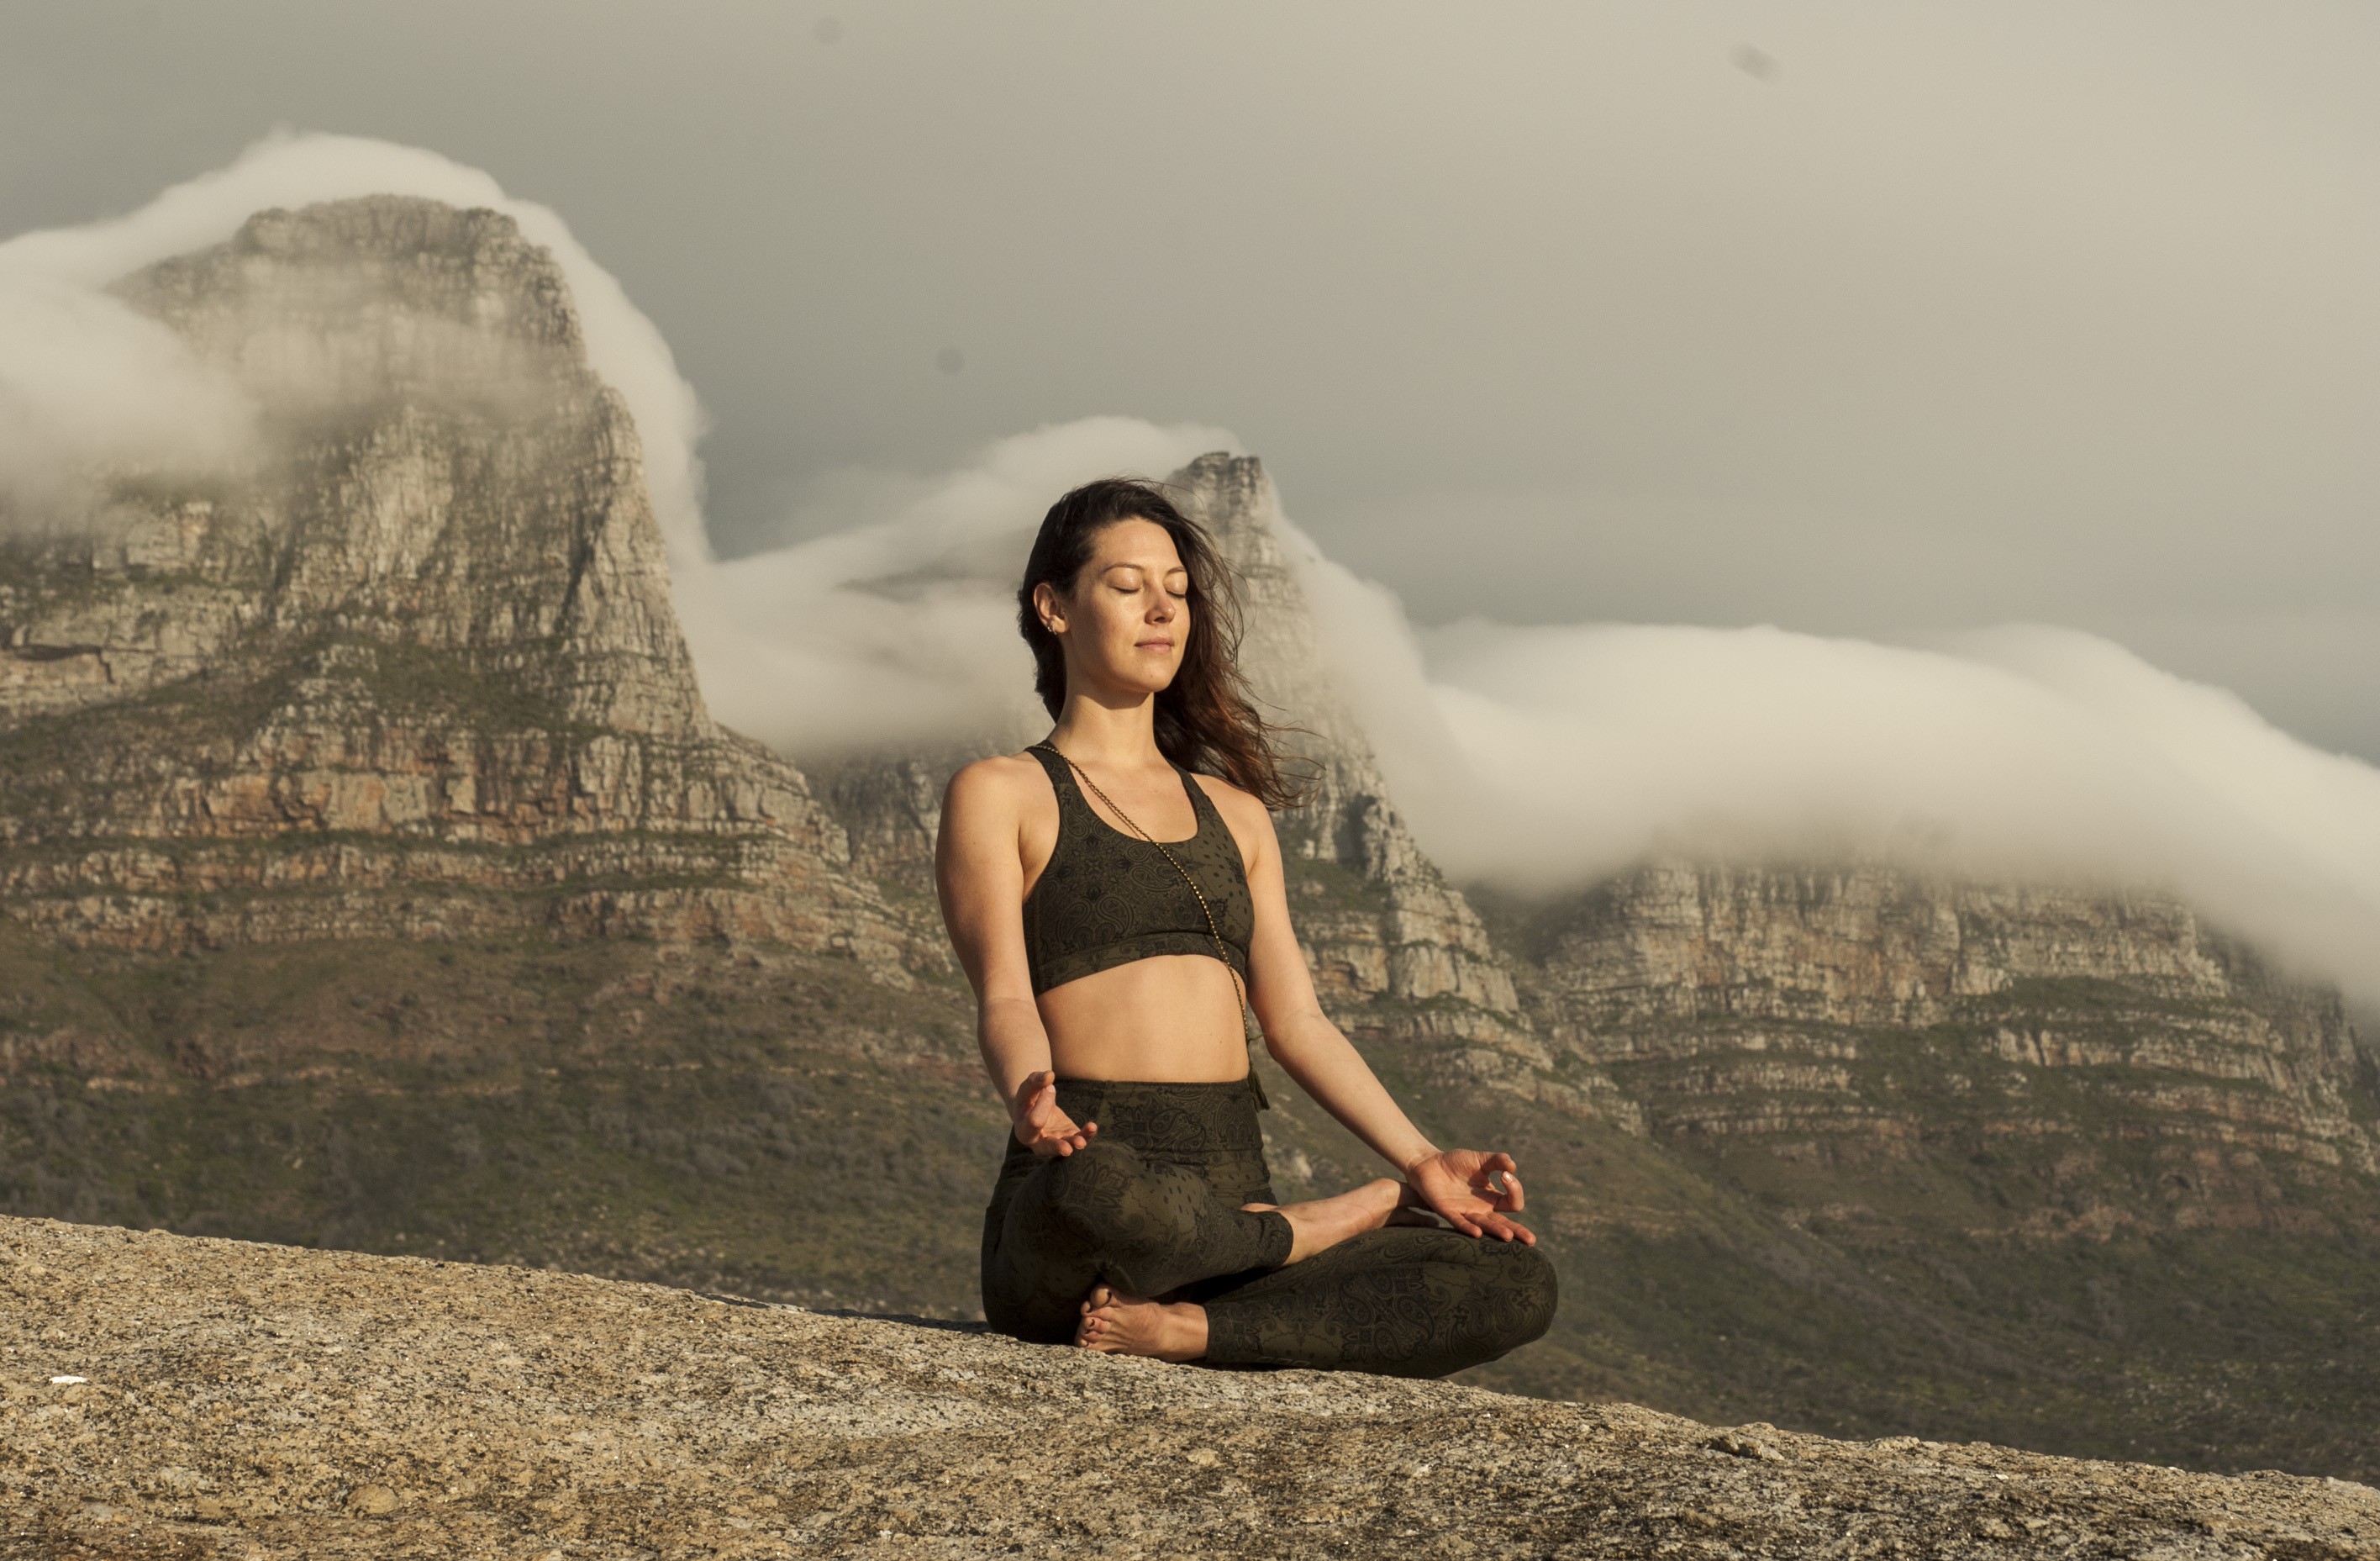 Person meditating in serene nature setting, representing Zen state